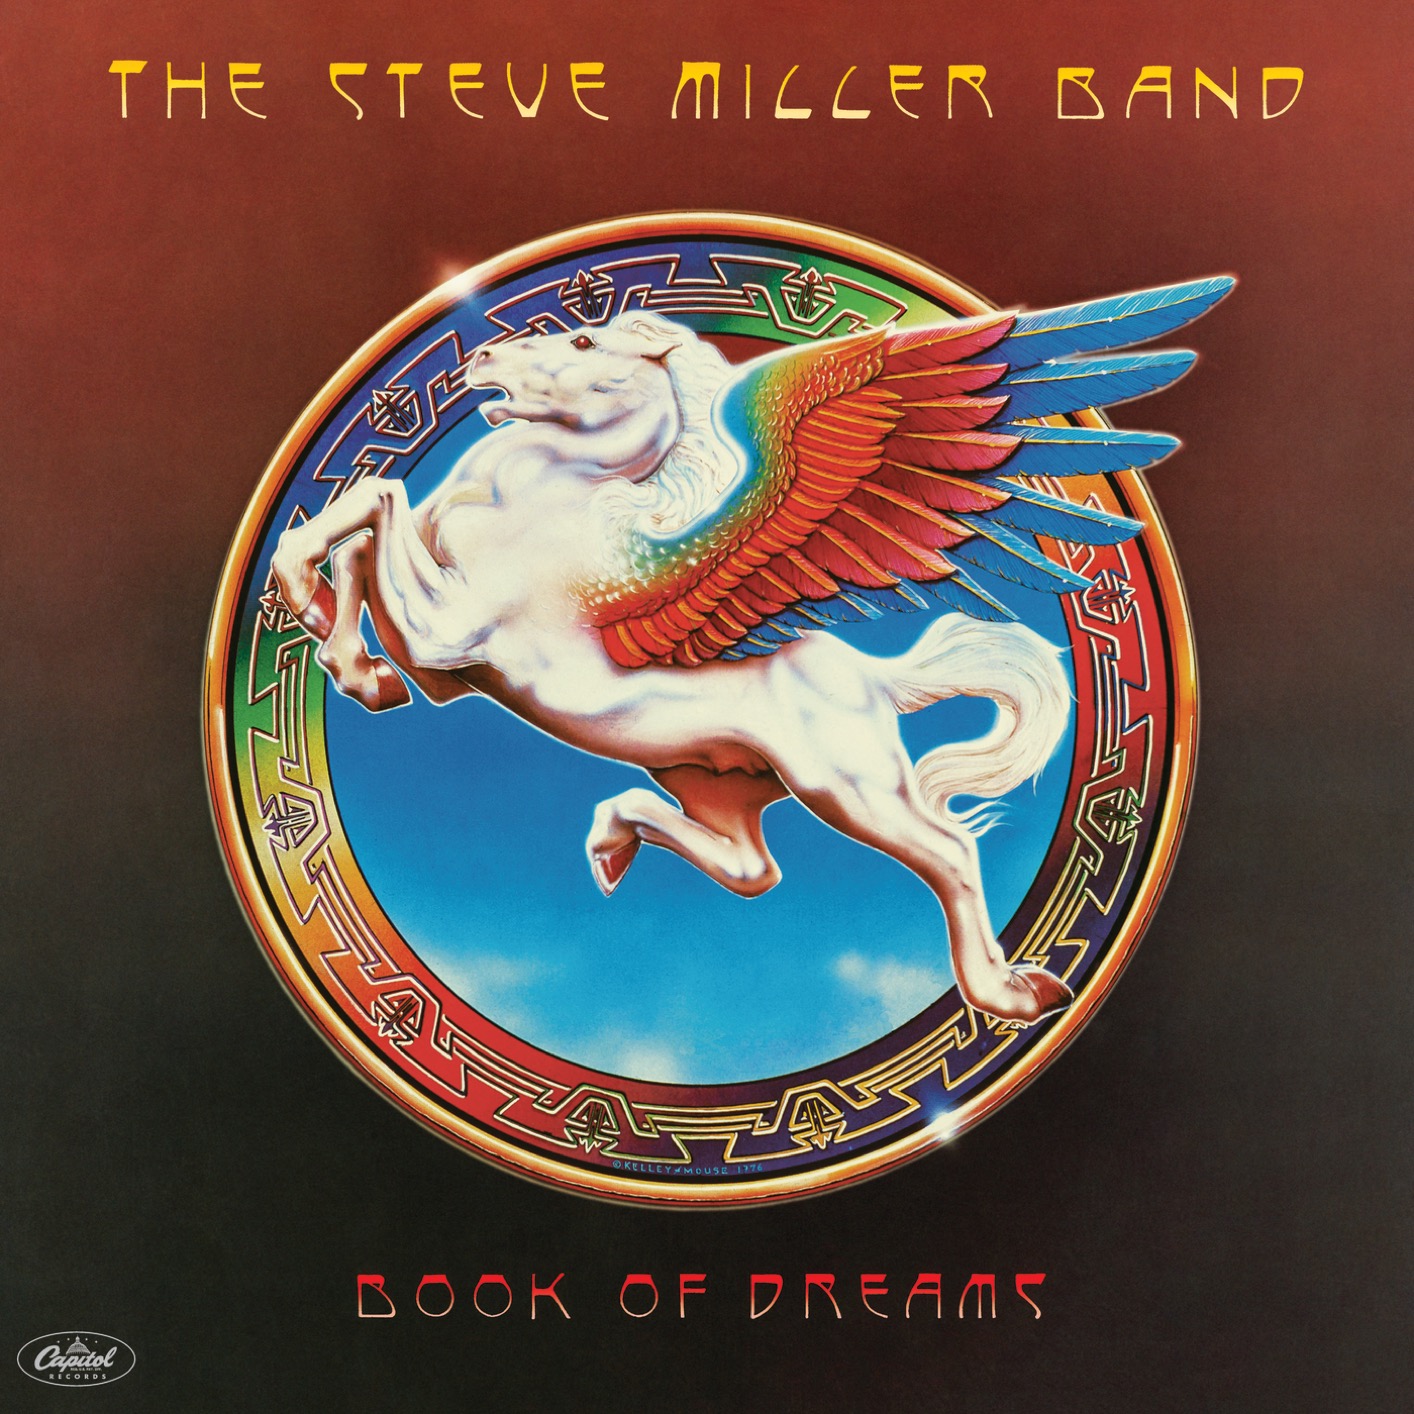 Steve Miller Band – Book Of Dreams (Remastered) (1977/2019) [FLAC 24bit/96kHz]